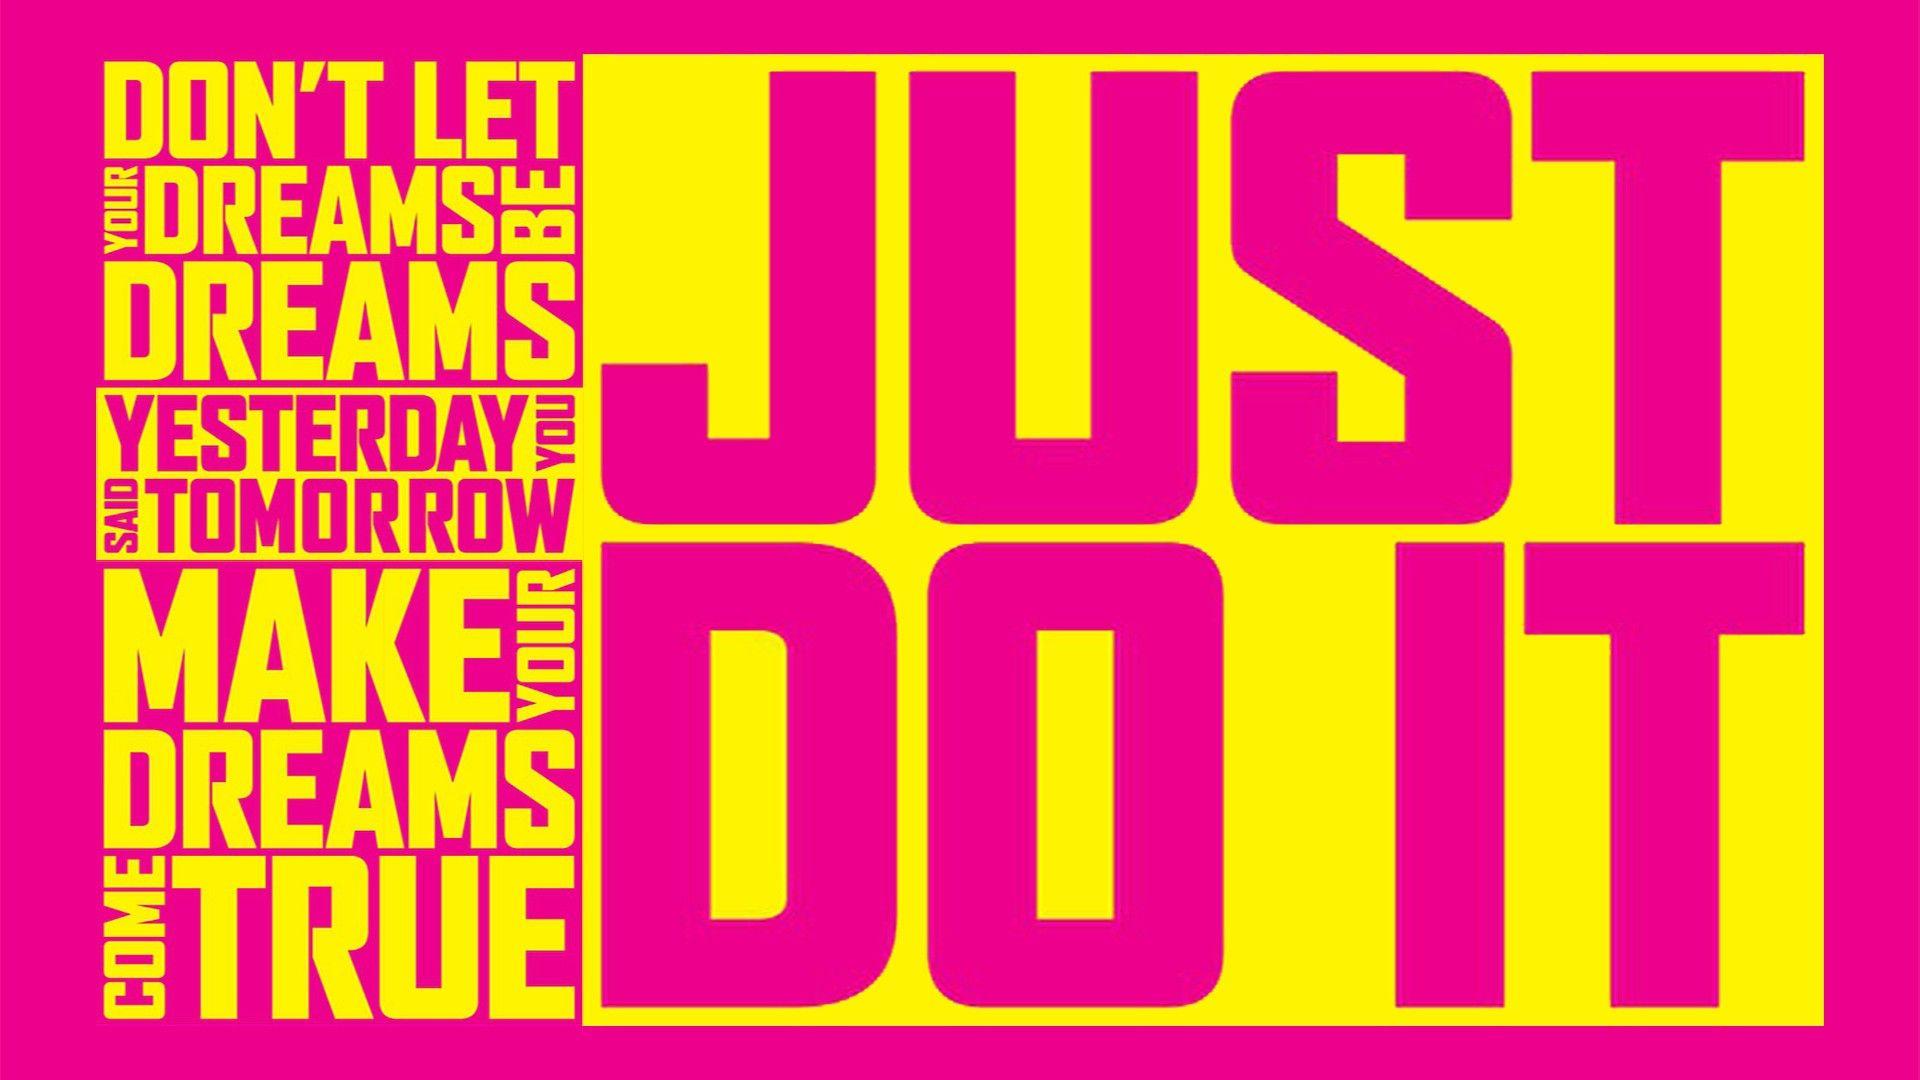 Just Do It! (1920 x 1080 wallpaper)